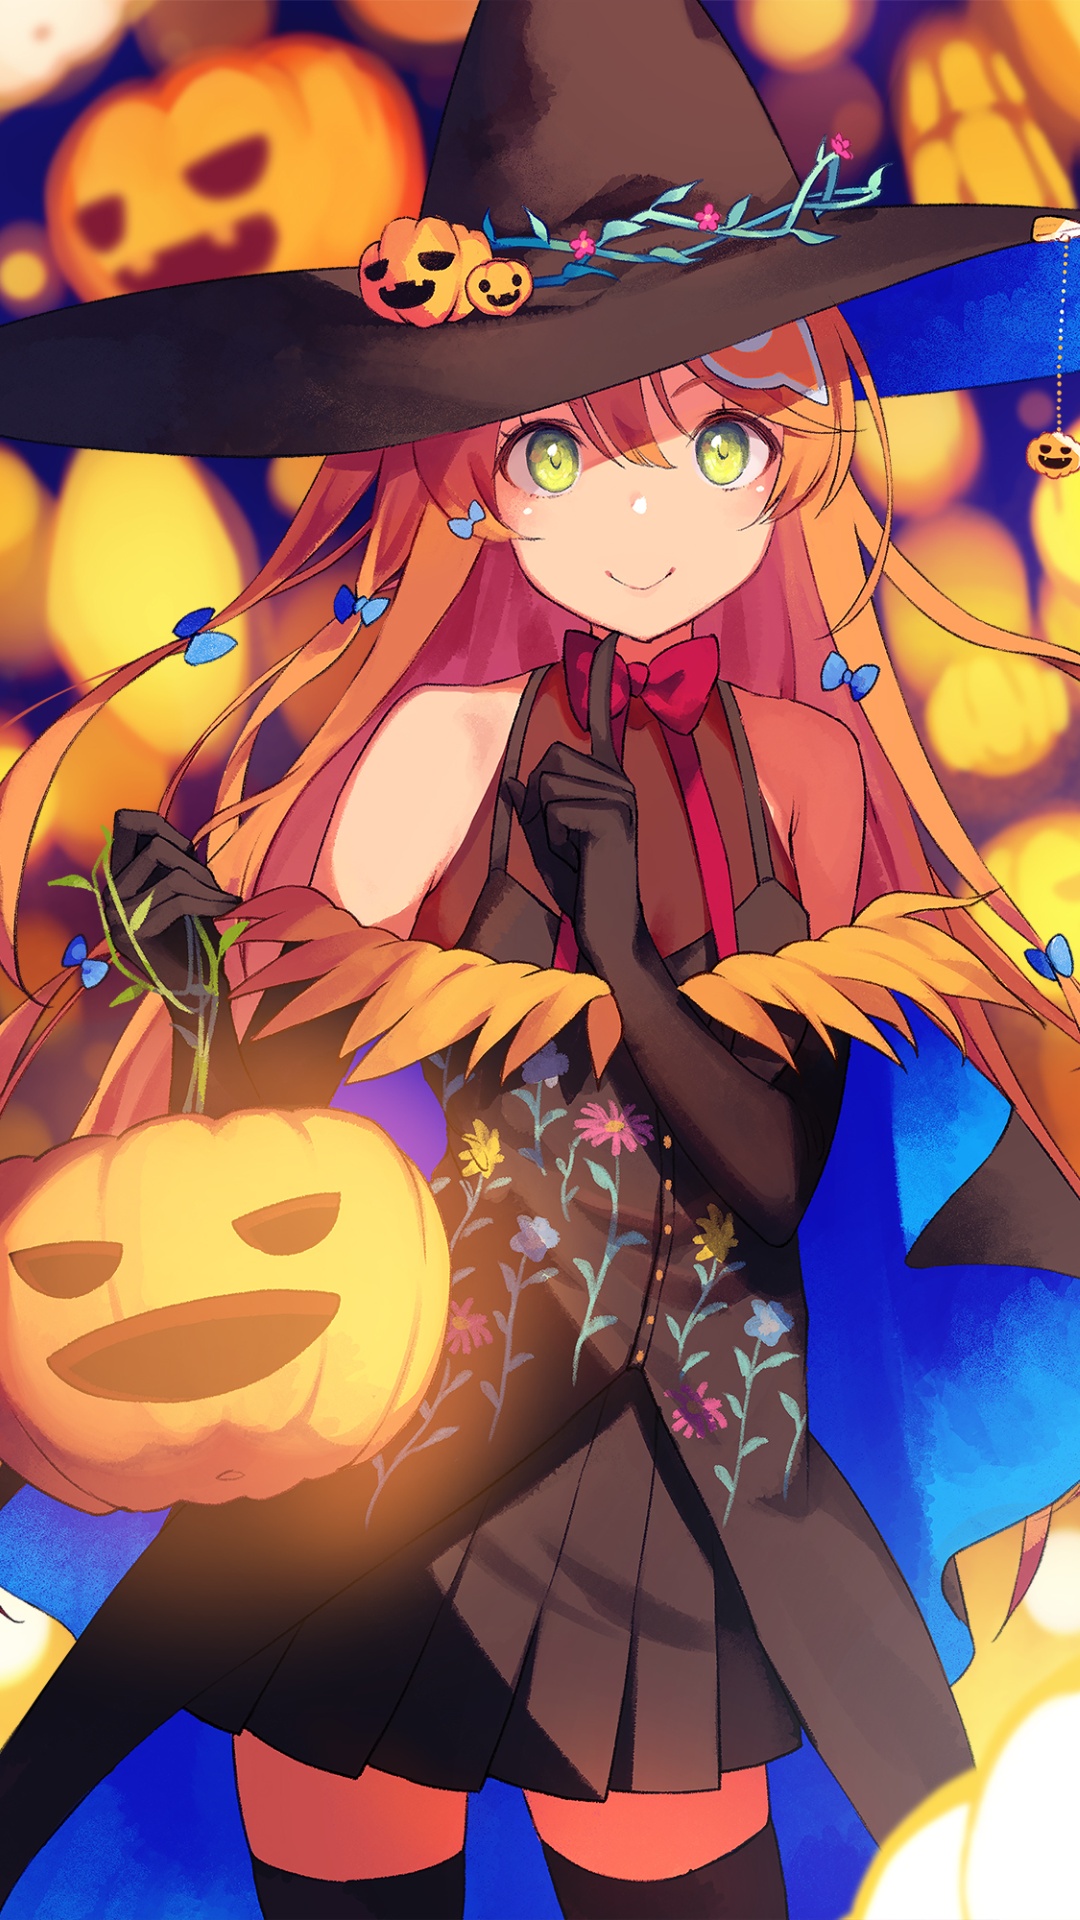 Aesthteic Halloween Anime Wallpaper